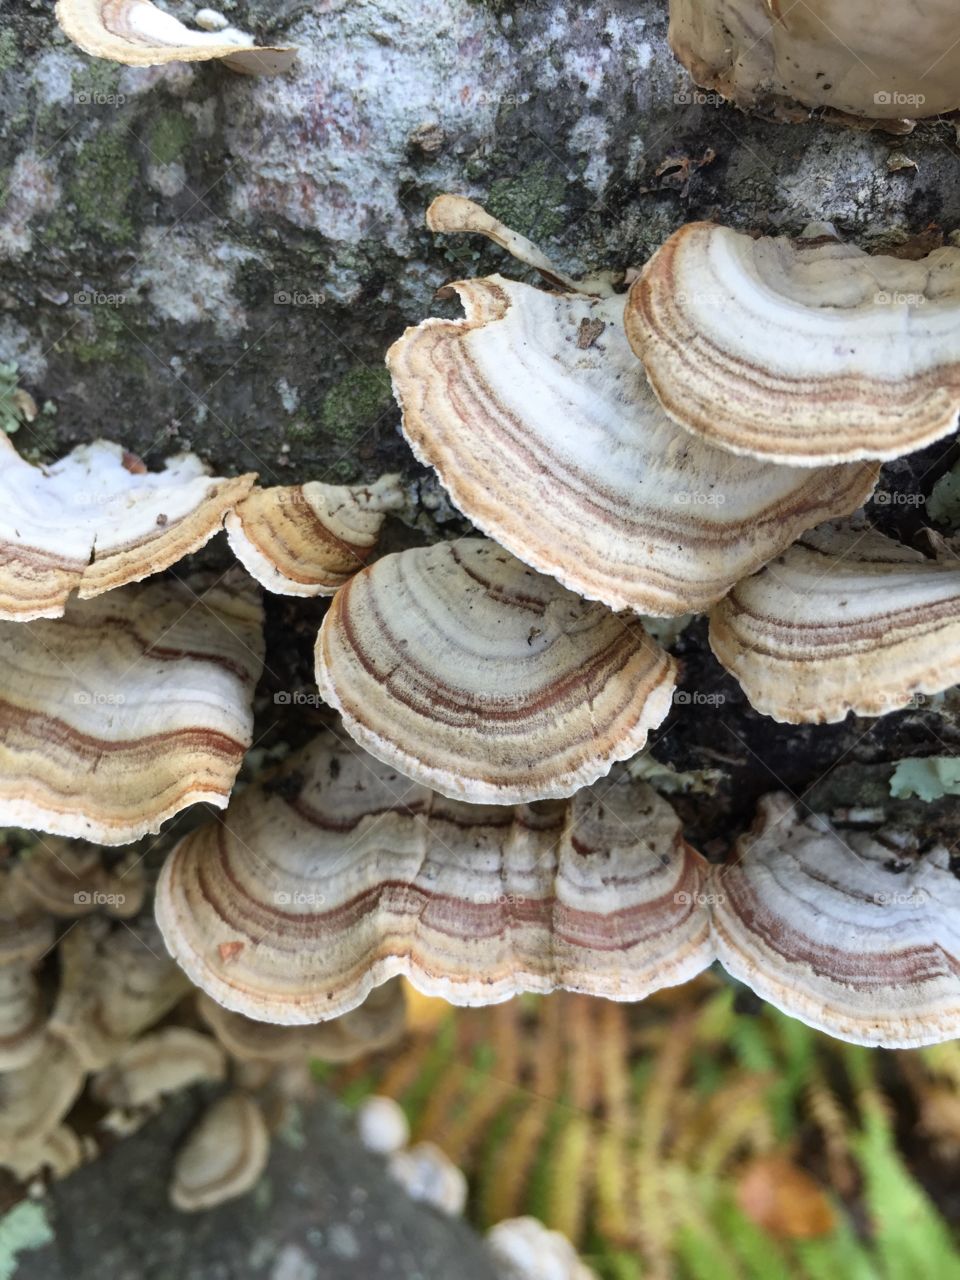 Interesting fungus 